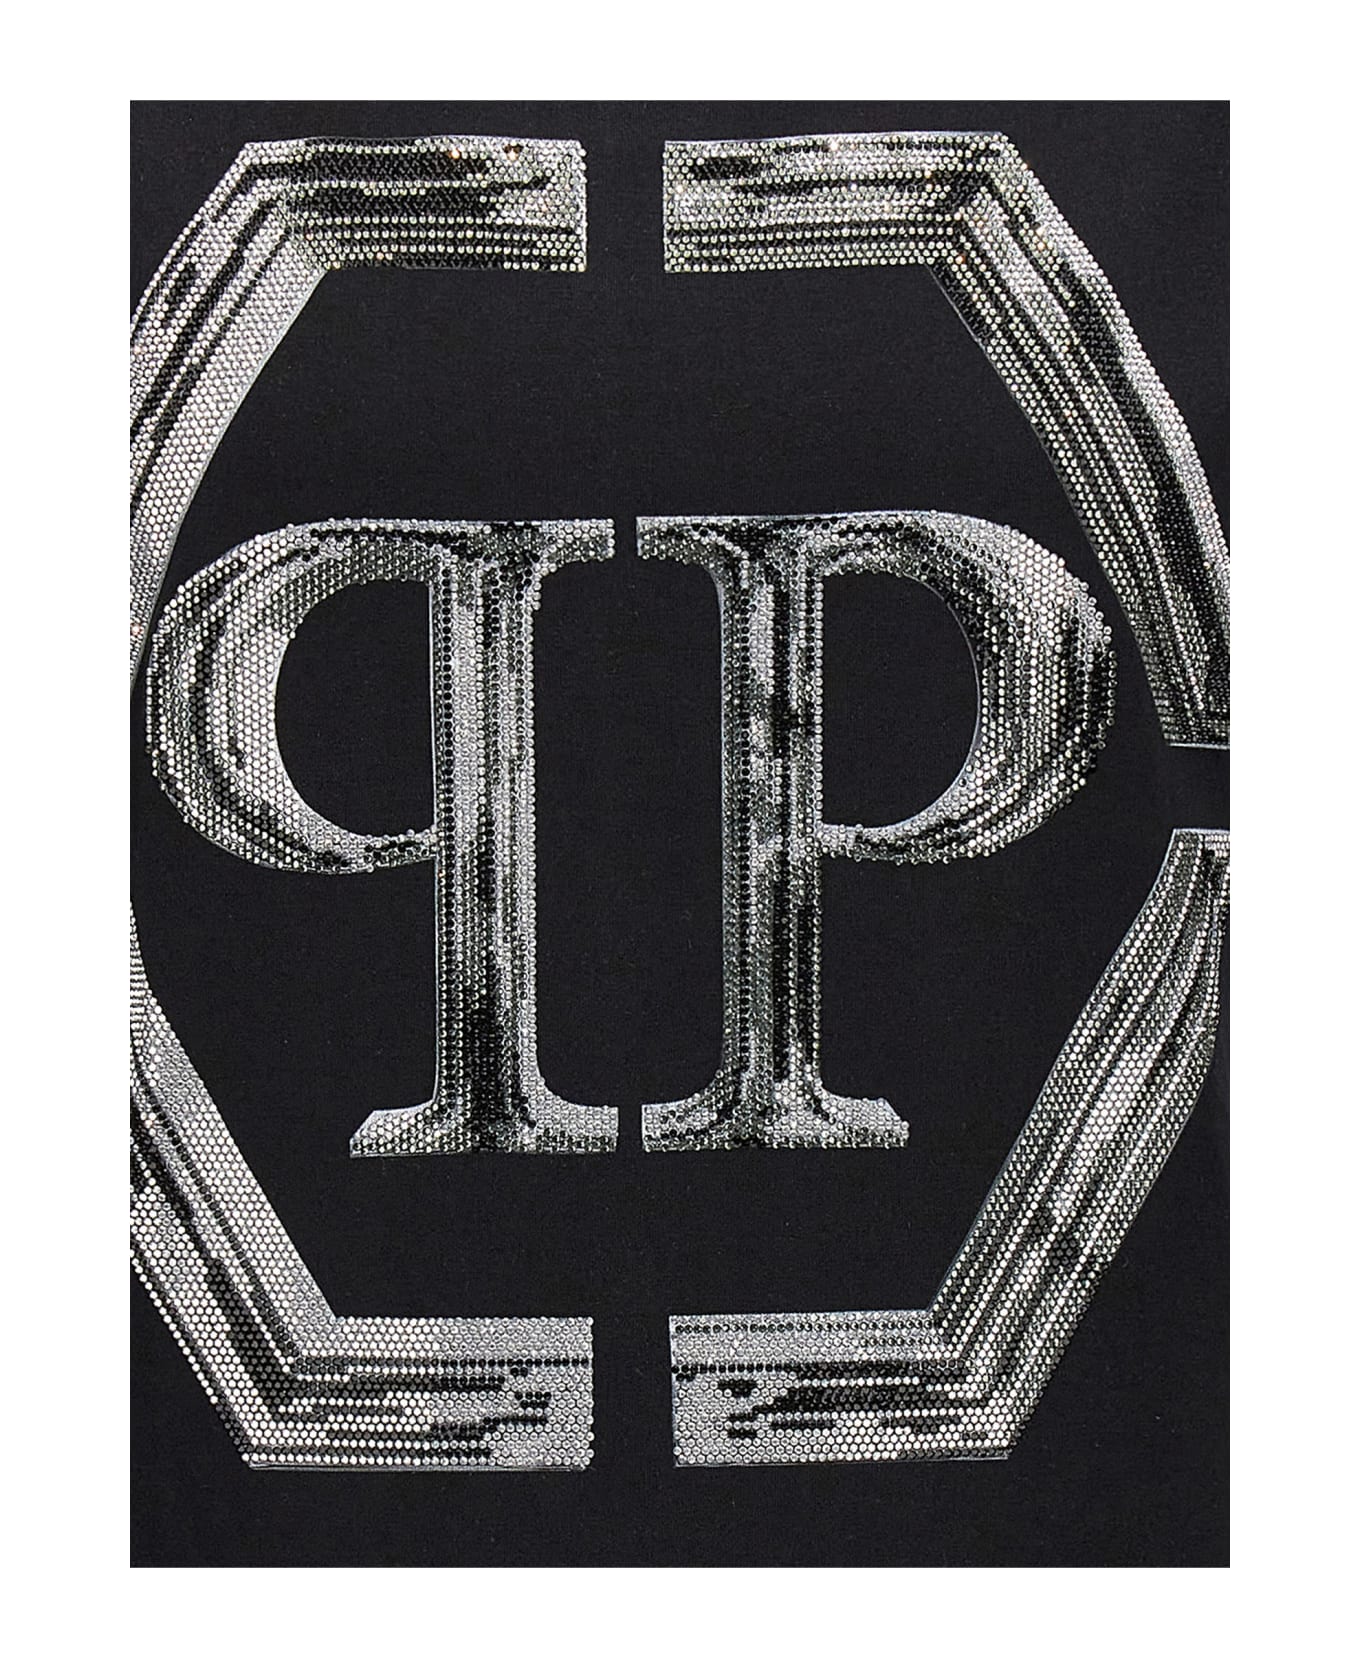 Philipp Plein Rhinestone Logo T-shirt - Black  